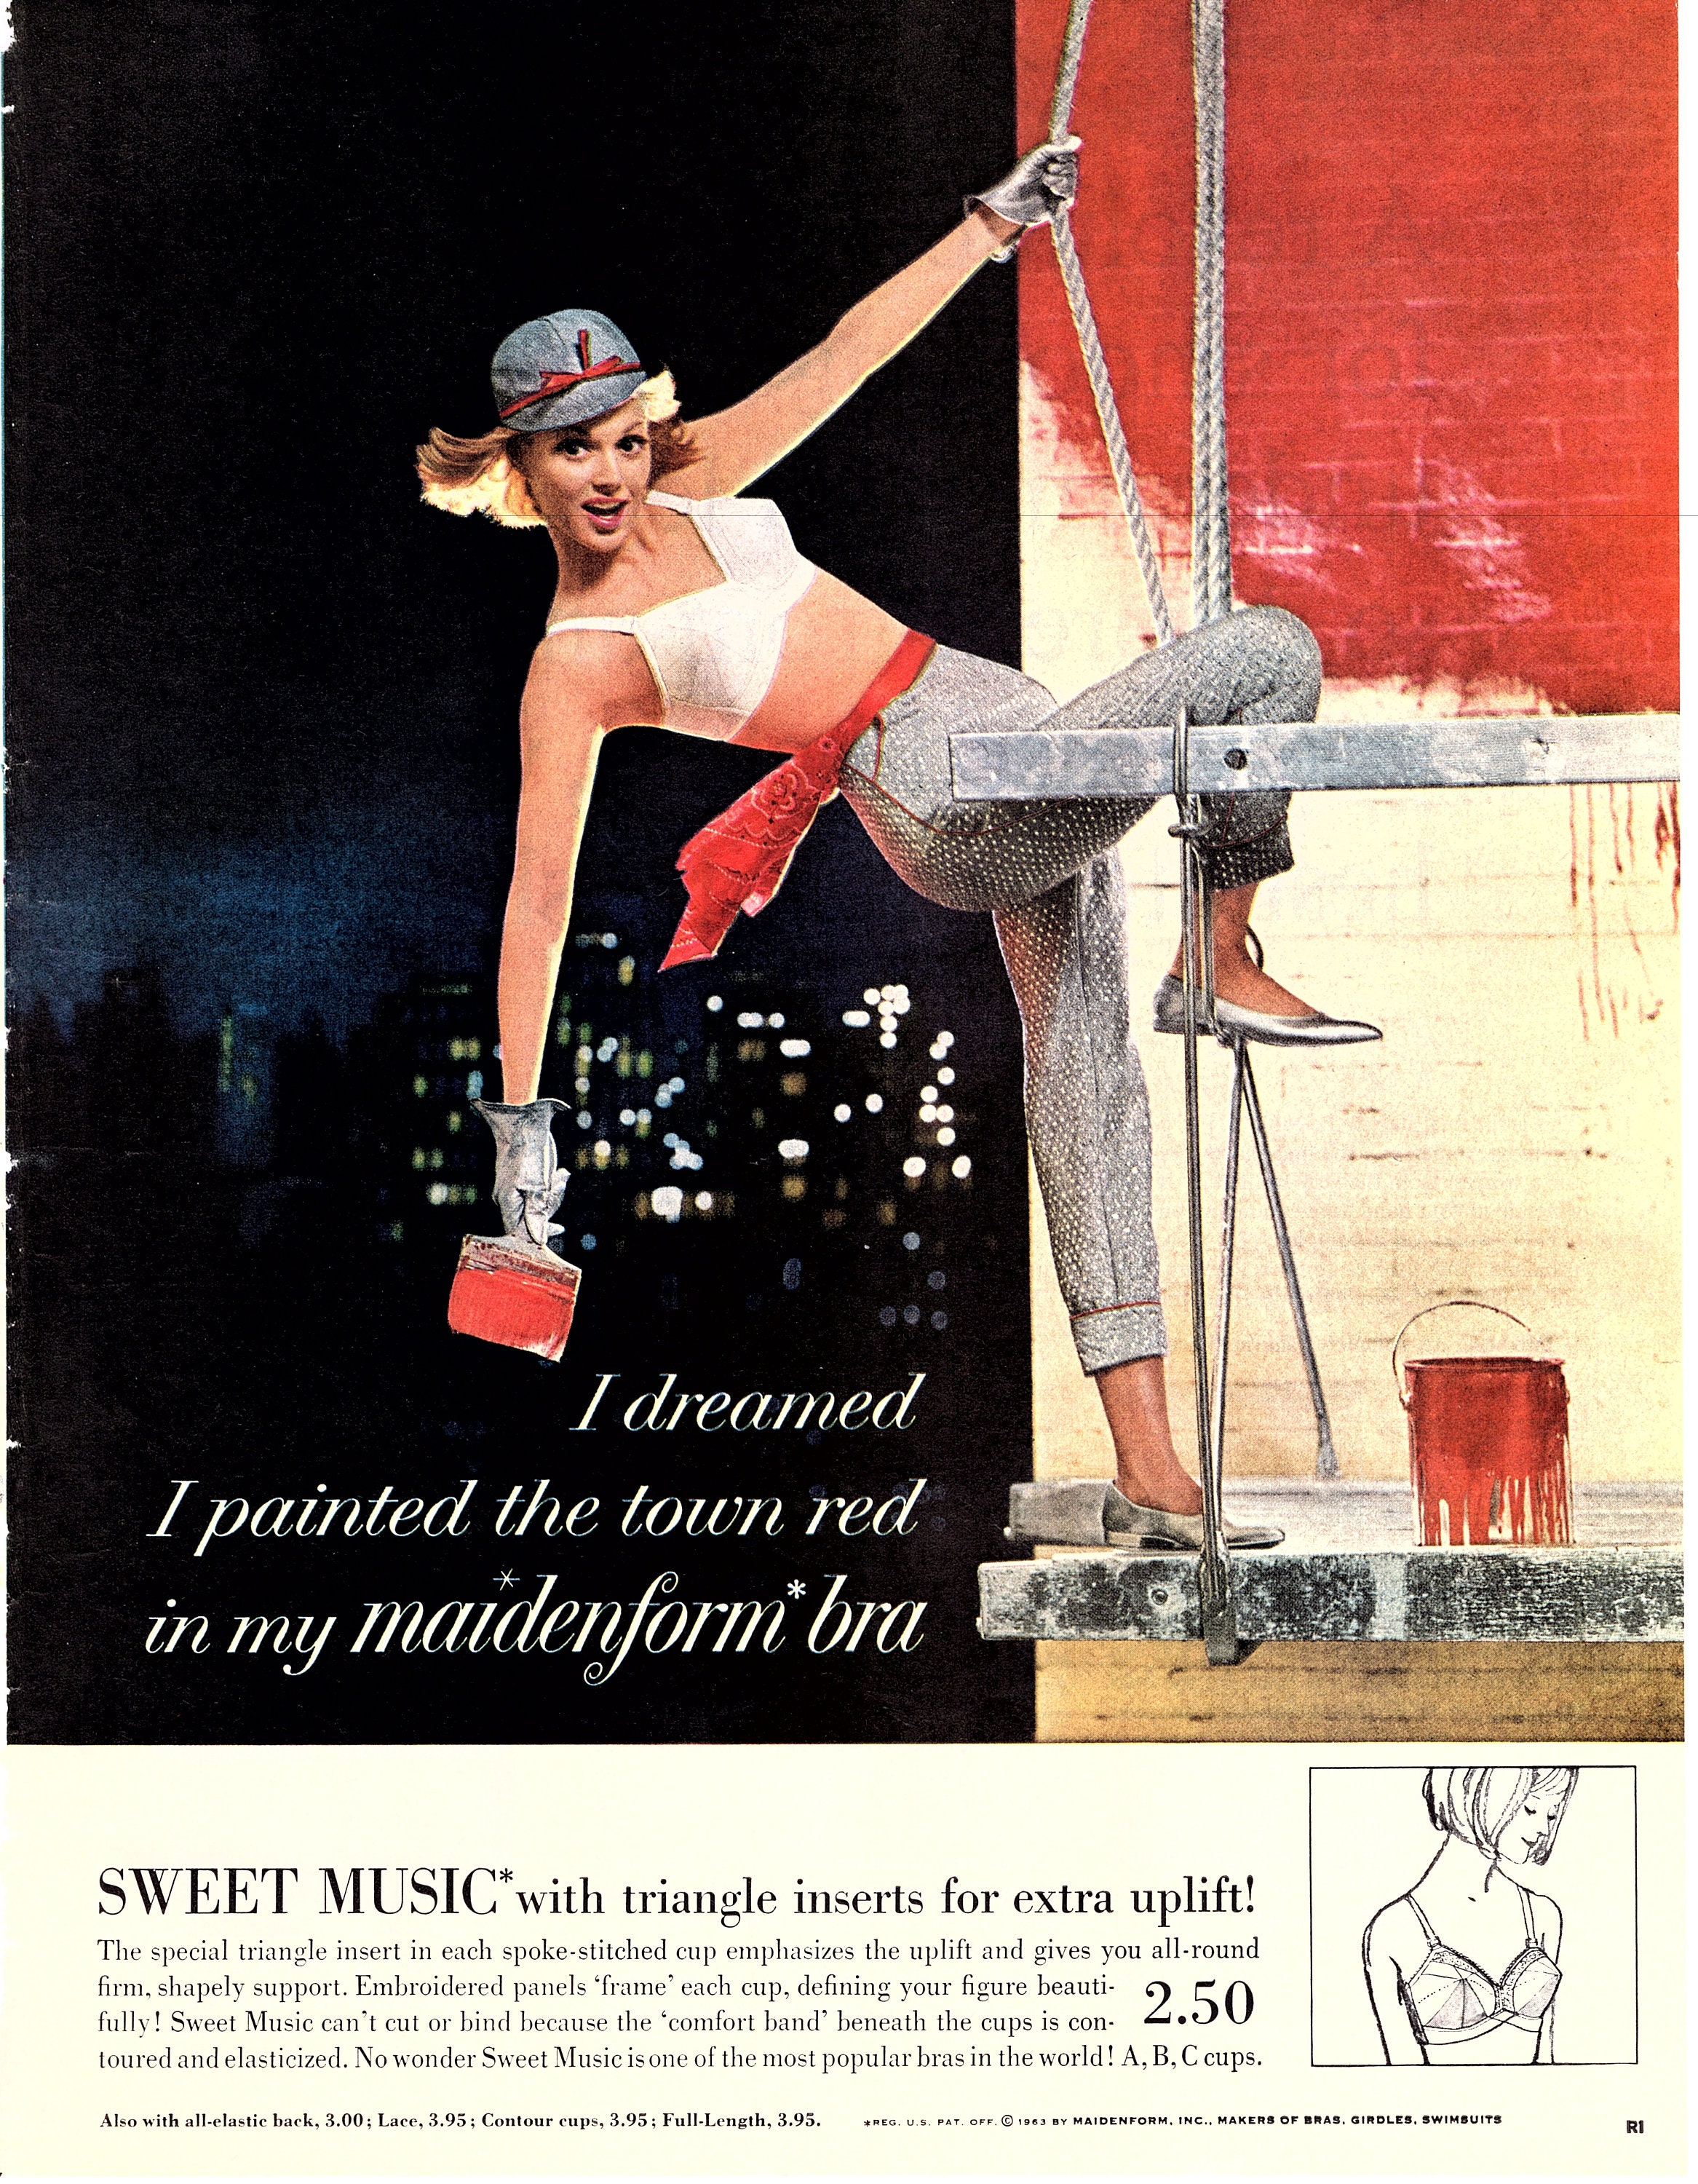 1952 PETER PAN Strapless Pointy Bra - Petty Women - 3 Figure Types -  VINTAGE AD 